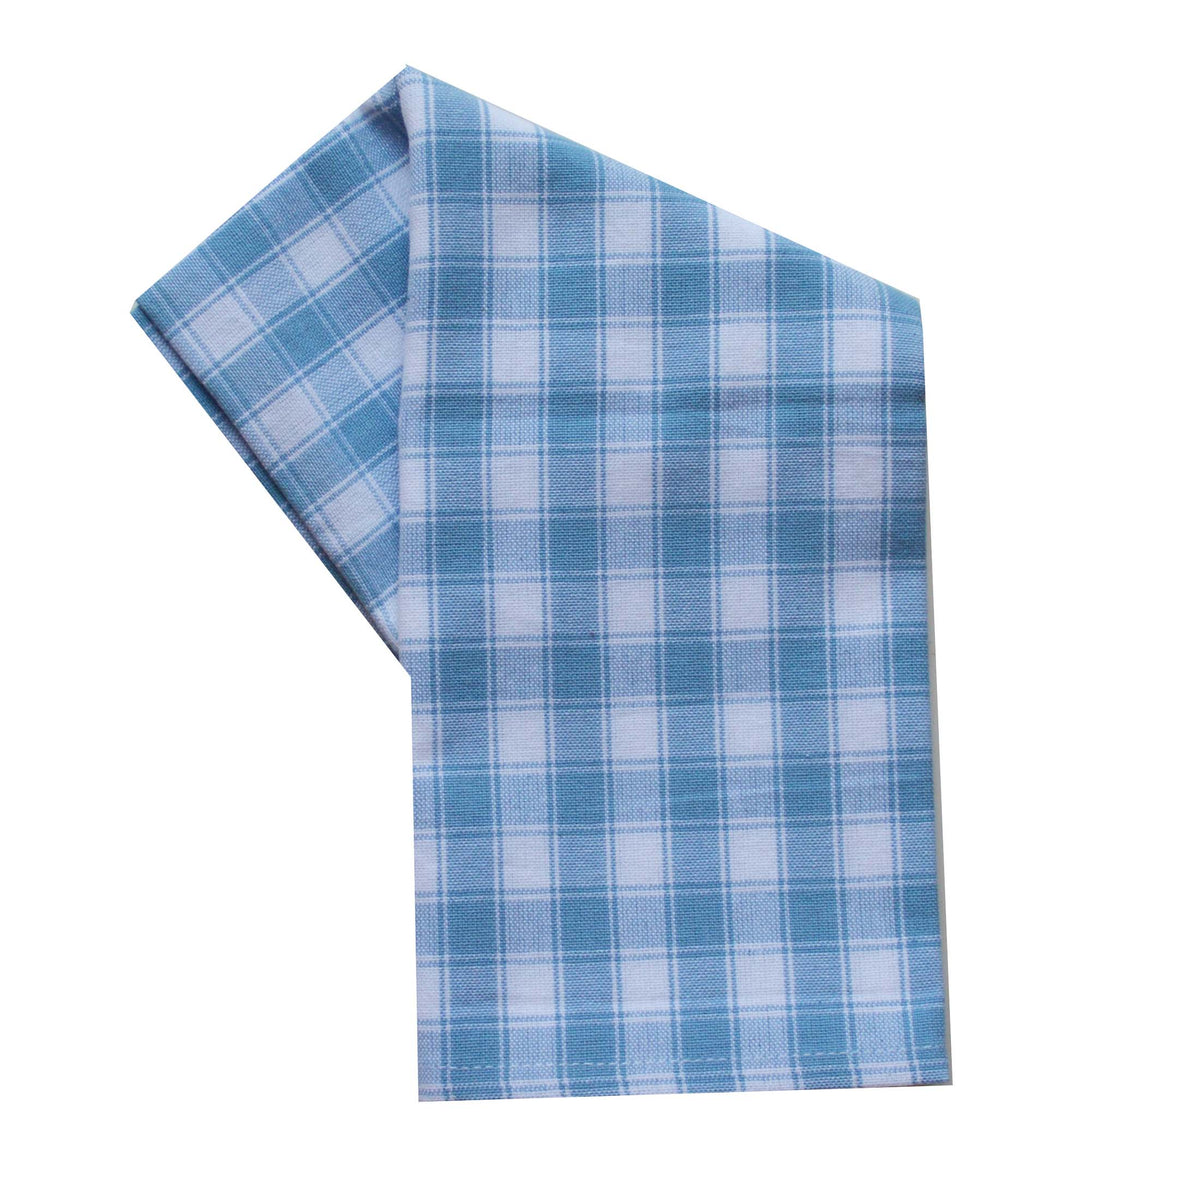 Spring Seasonal Towel Set of 3 - Light Blue